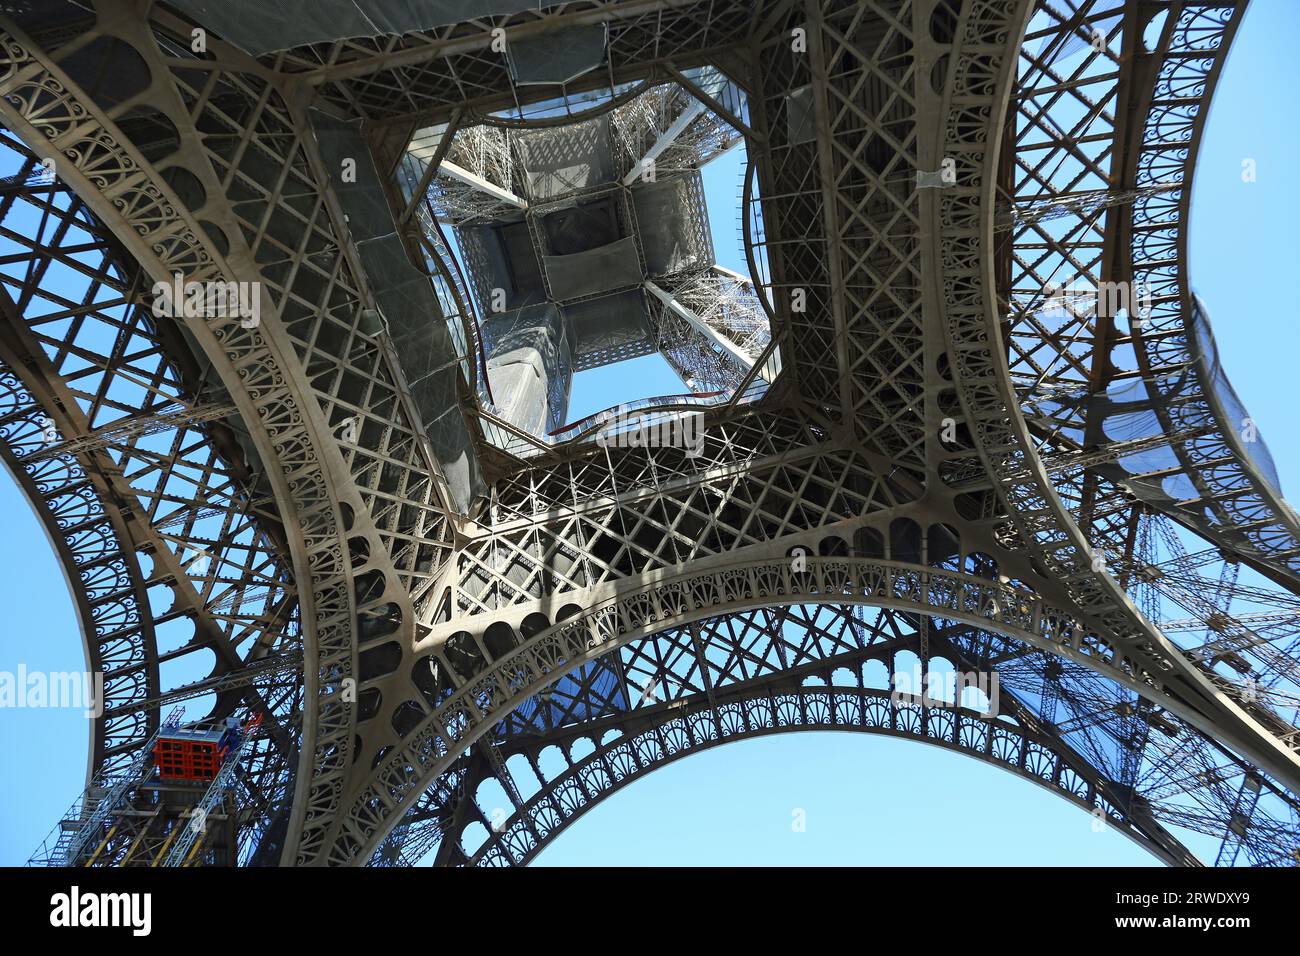 Under Eiffel Tower - Paris, France Stock Photo